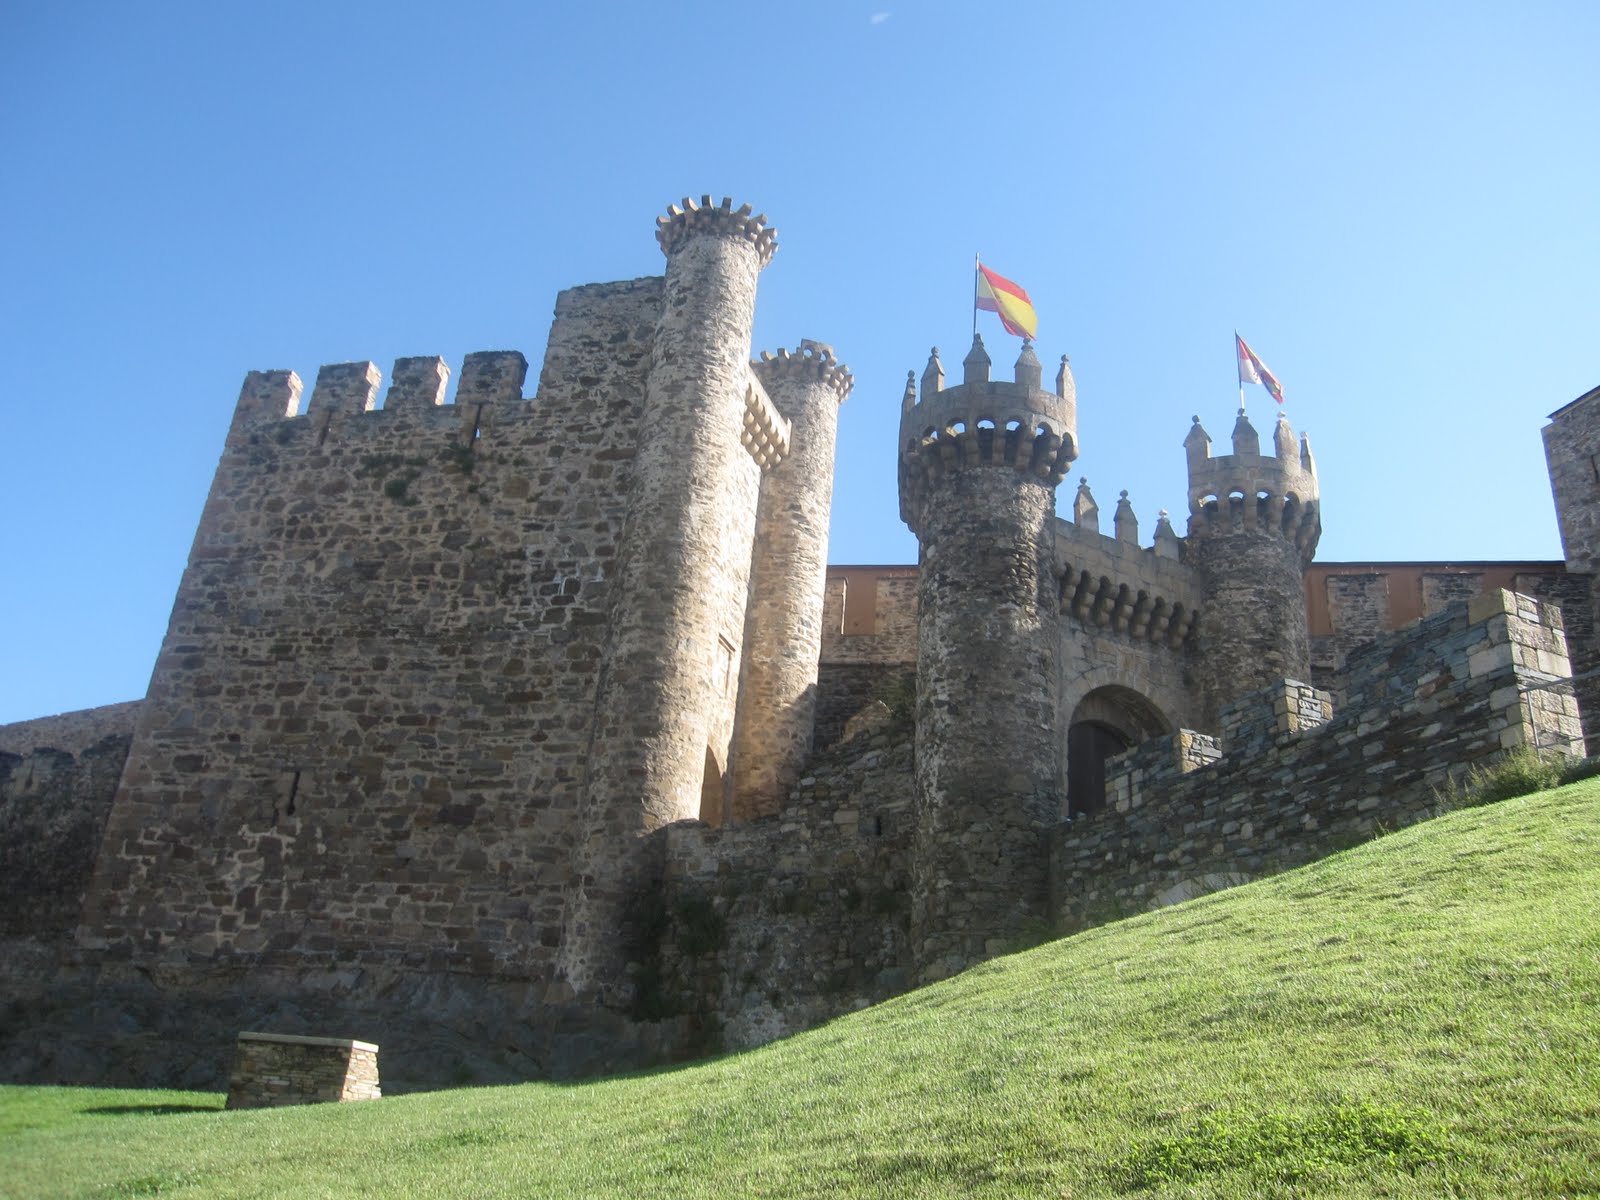 Templar Castle Of Ponferrada Backgrounds on Wallpapers Vista